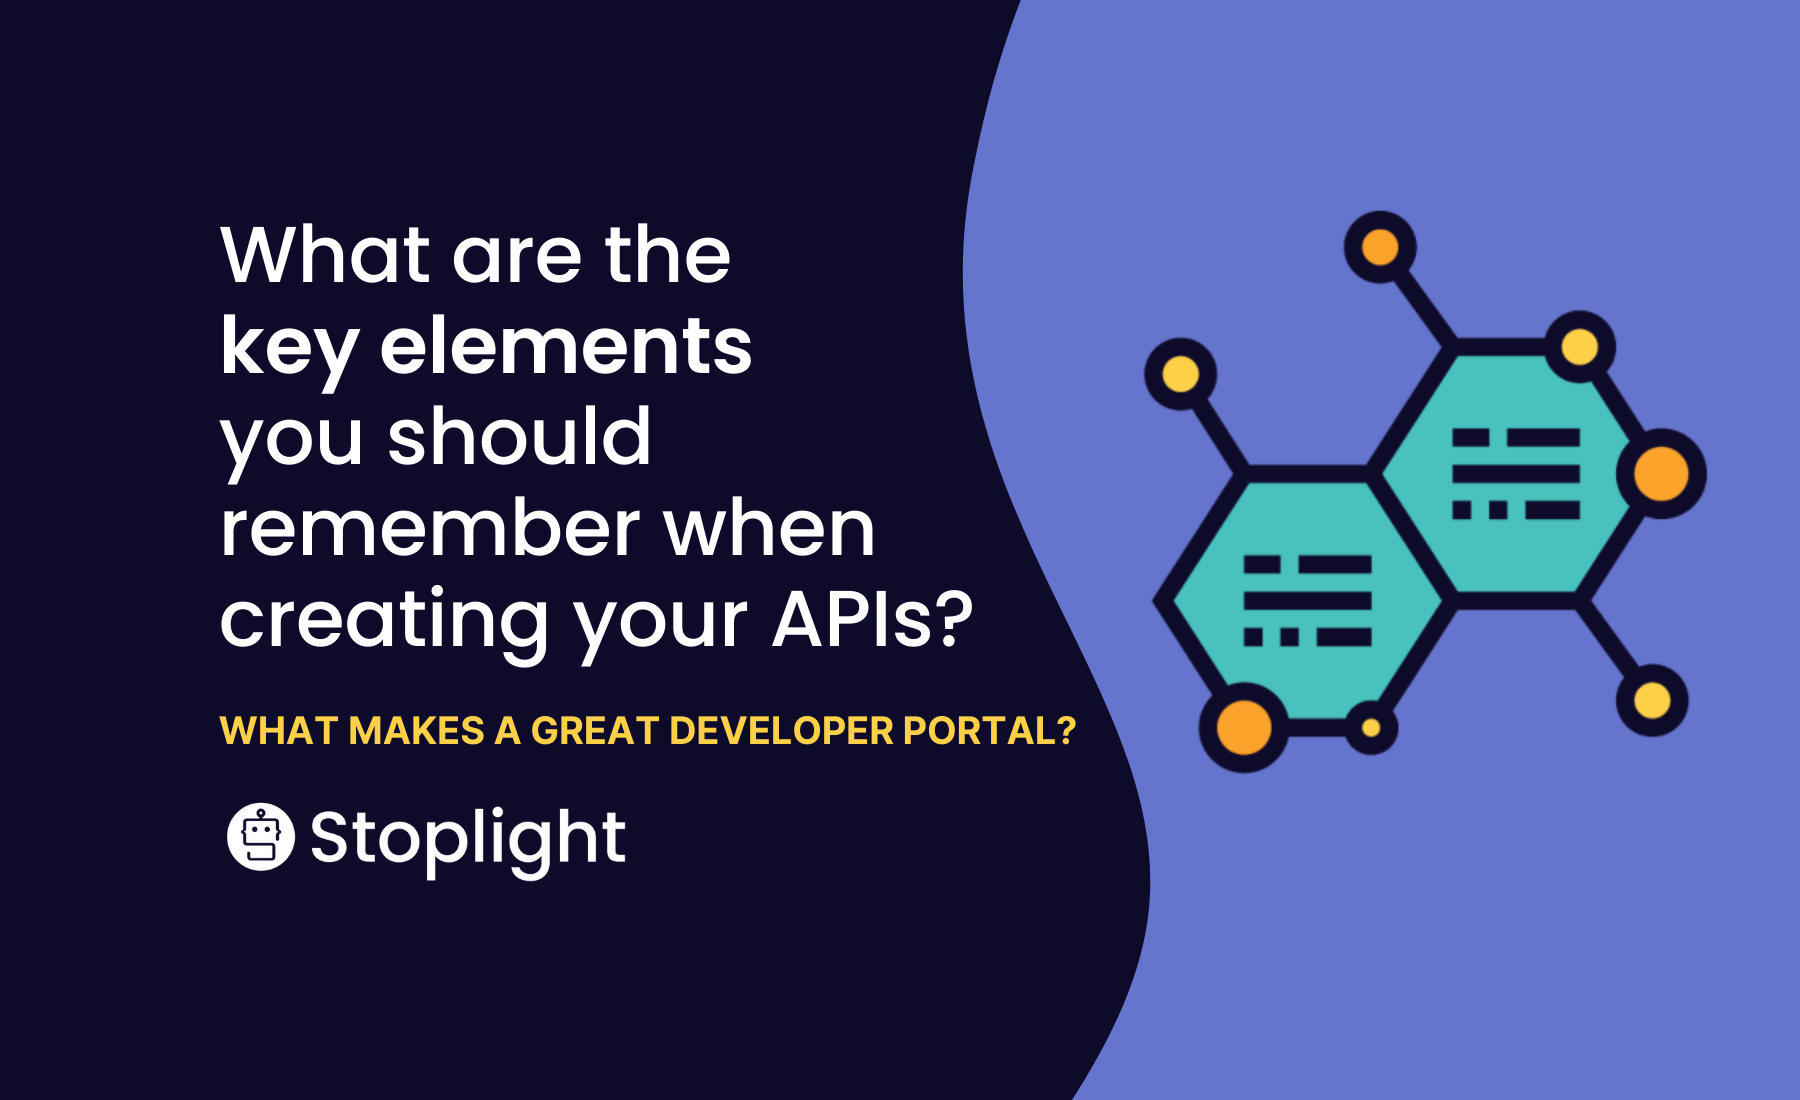 What Makes a Great Developer Portal?